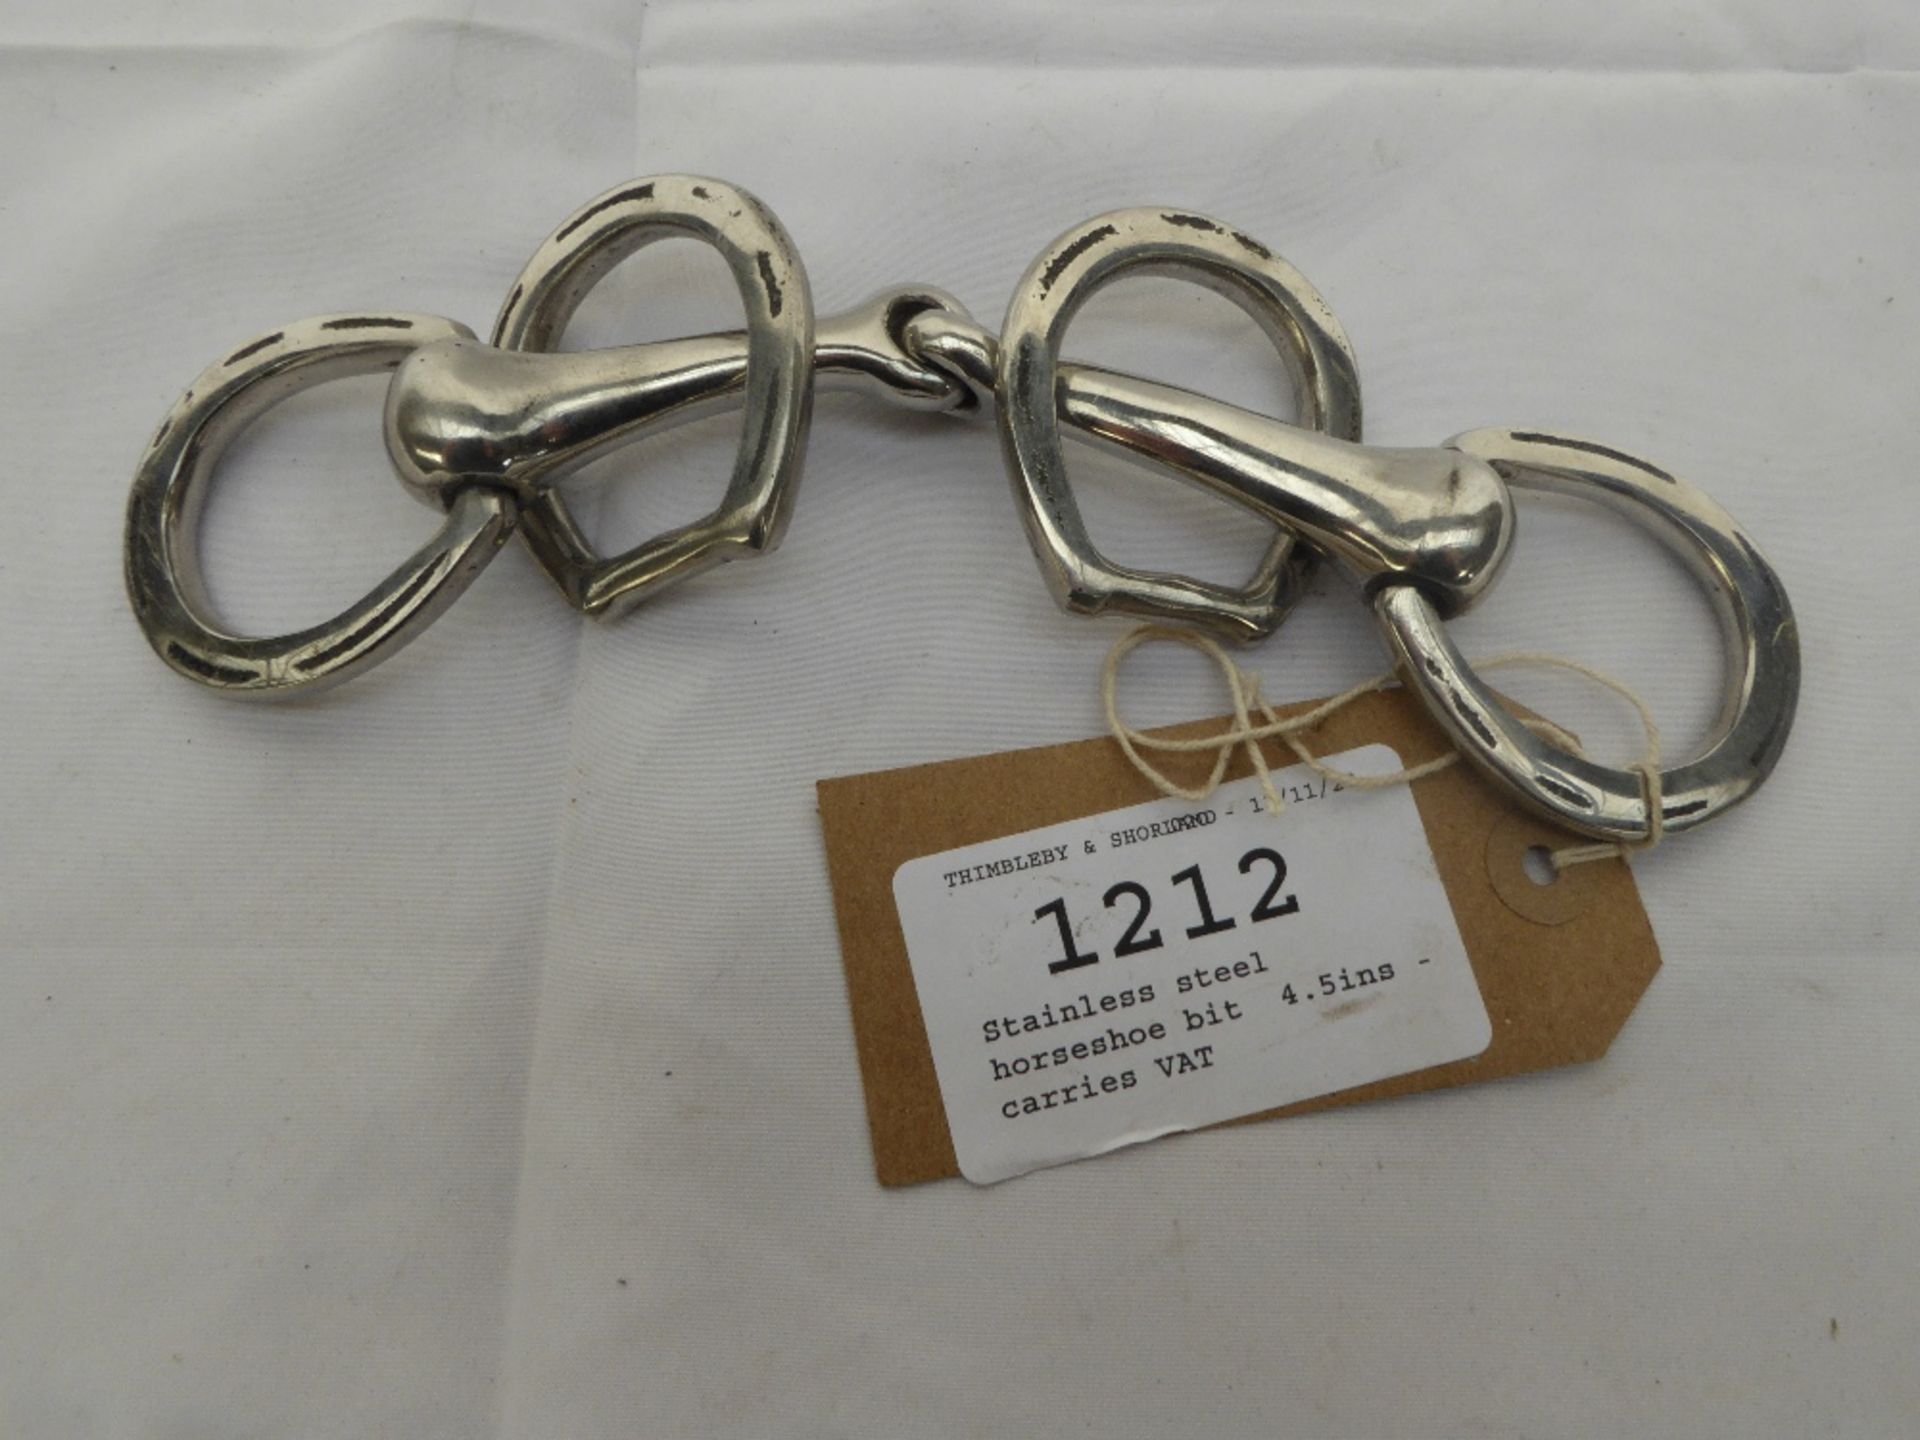 Stainless steel horseshoe bit, 4.5ins - carries VAT